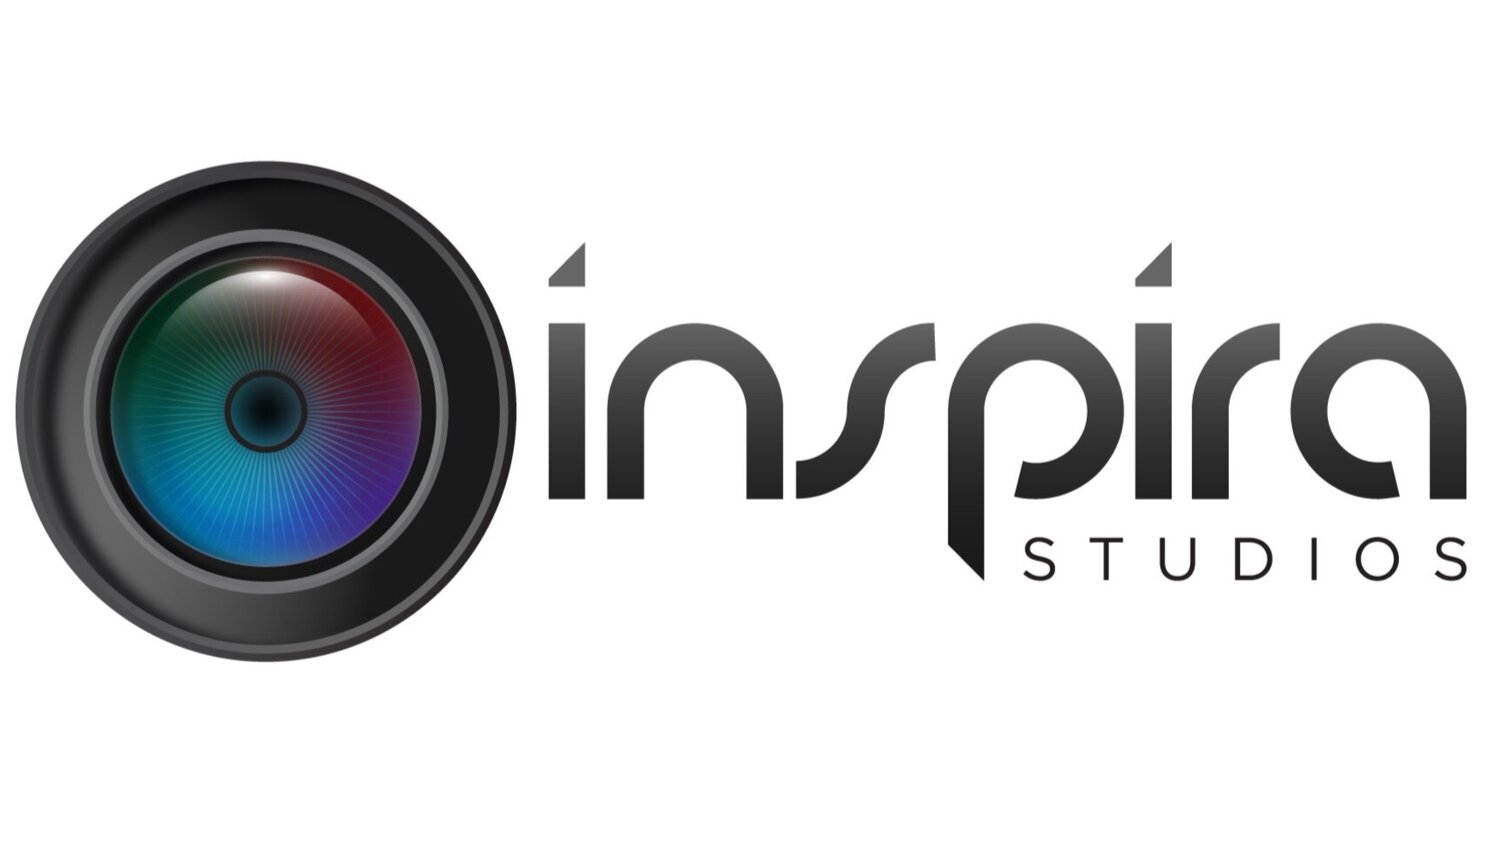 Inspira Studios